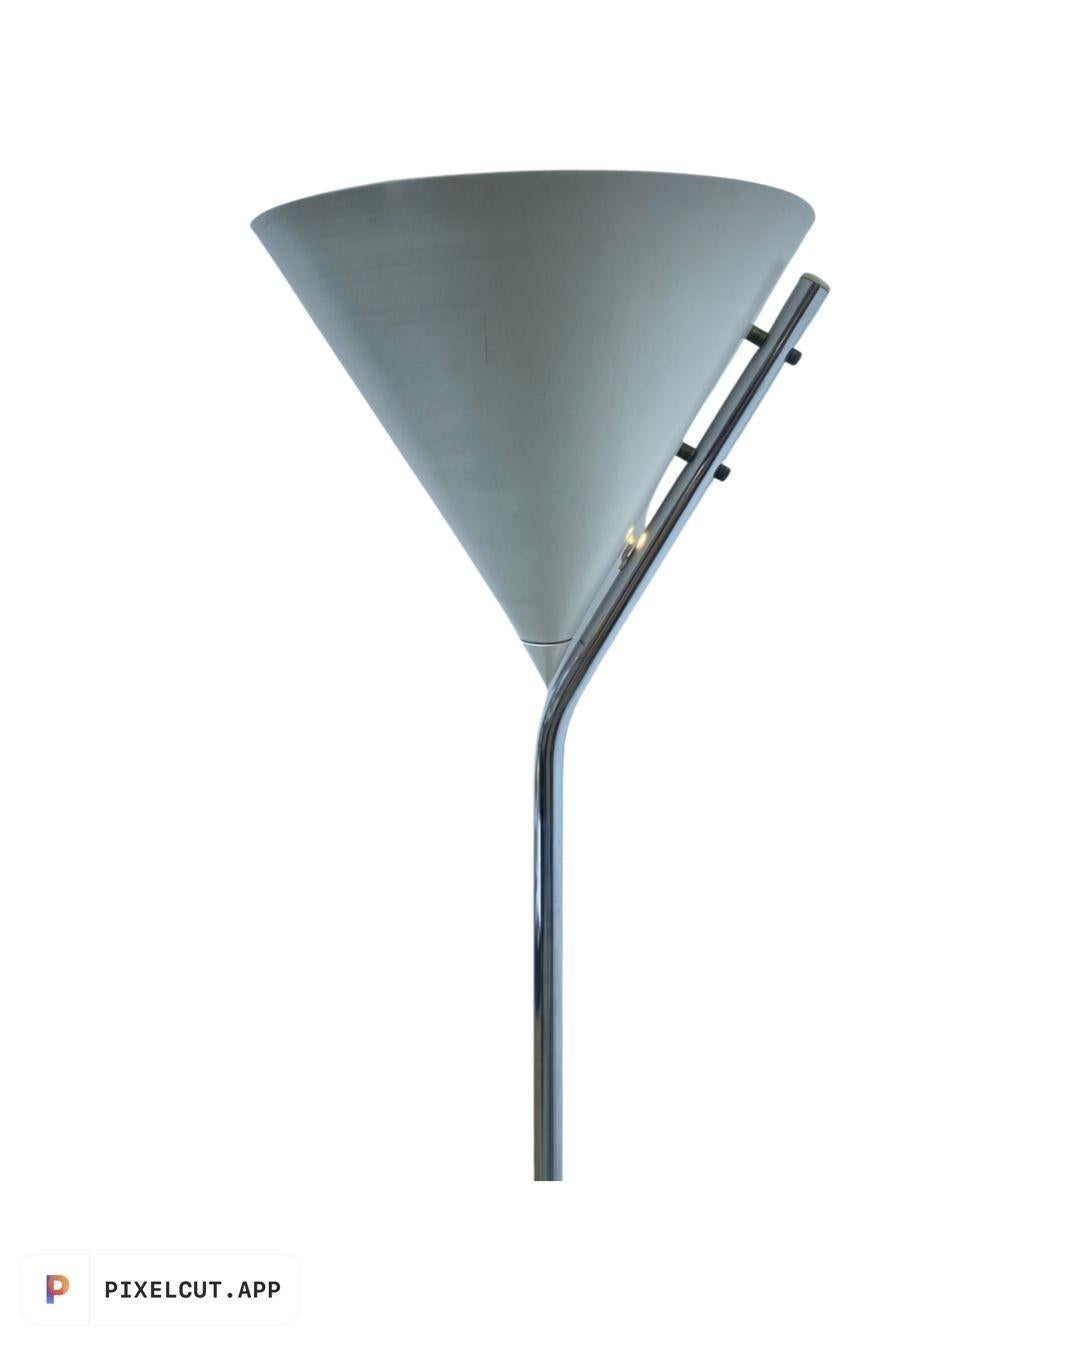 Double cone design original Mid-Century Modern floor lamp with chrome body.